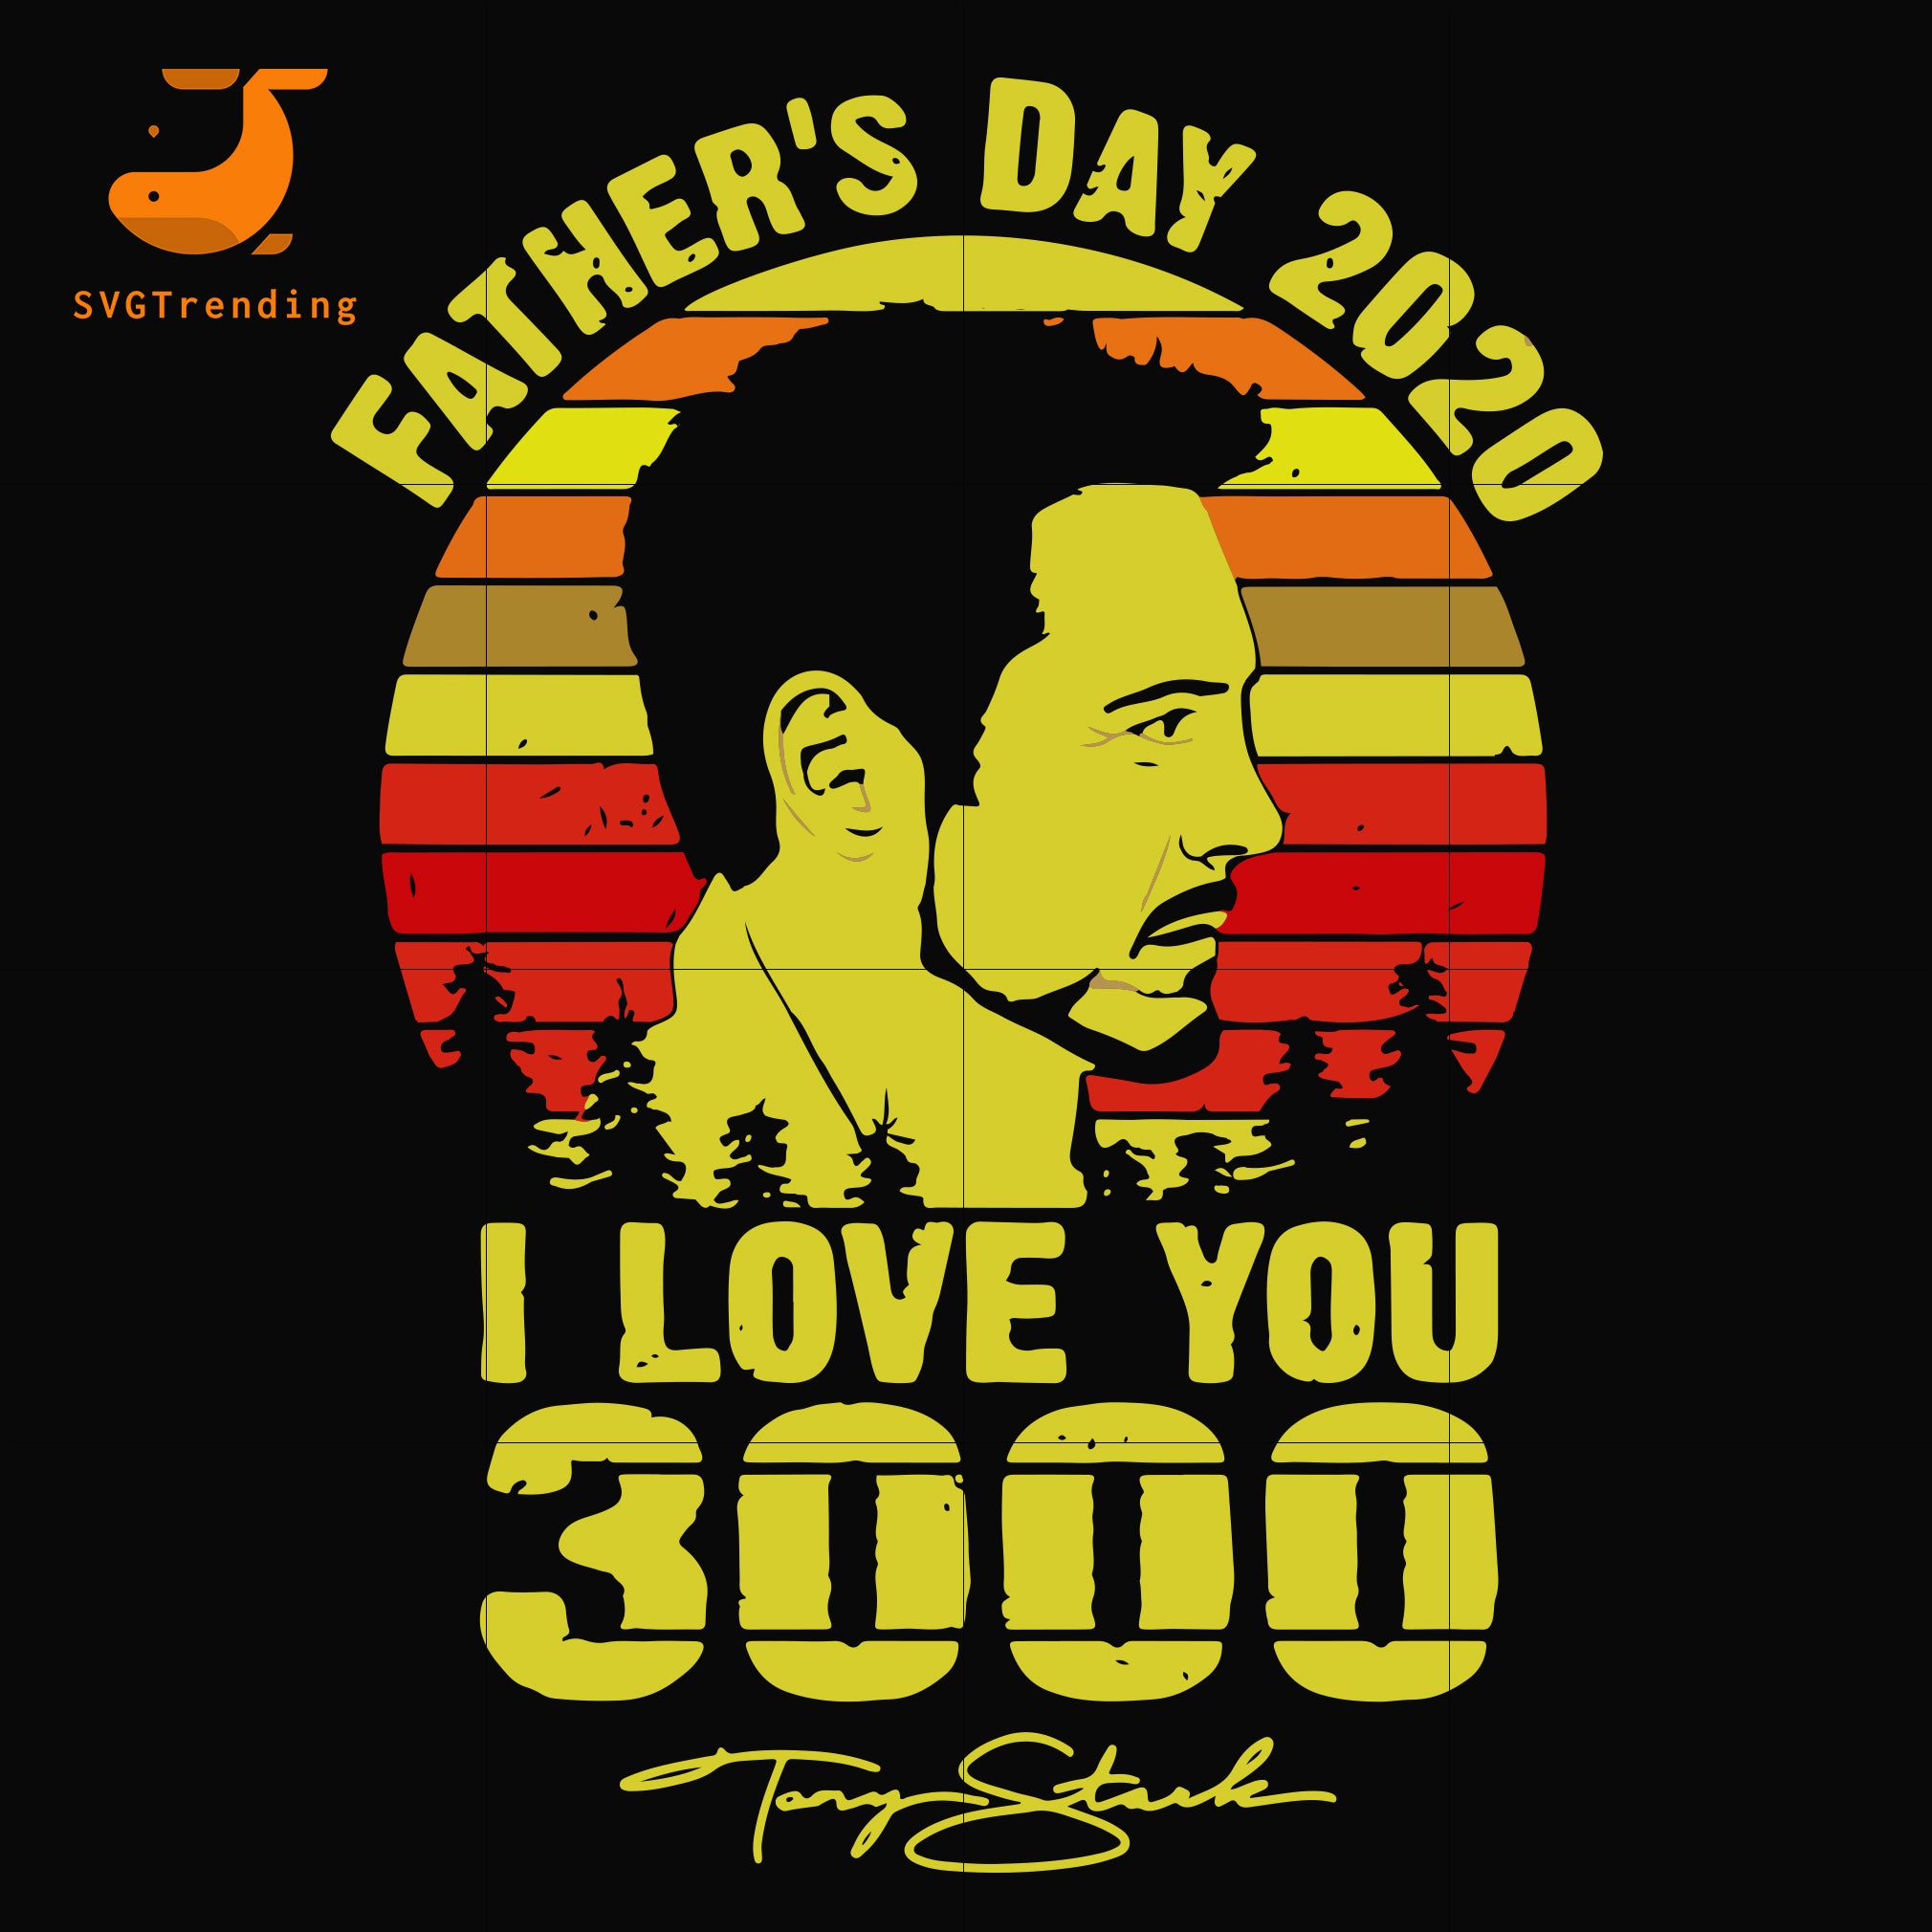 Download Father S Day 2020 I Love You 3000 Svg Png Dxf Eps Digital File Ftd7 Svgtrending